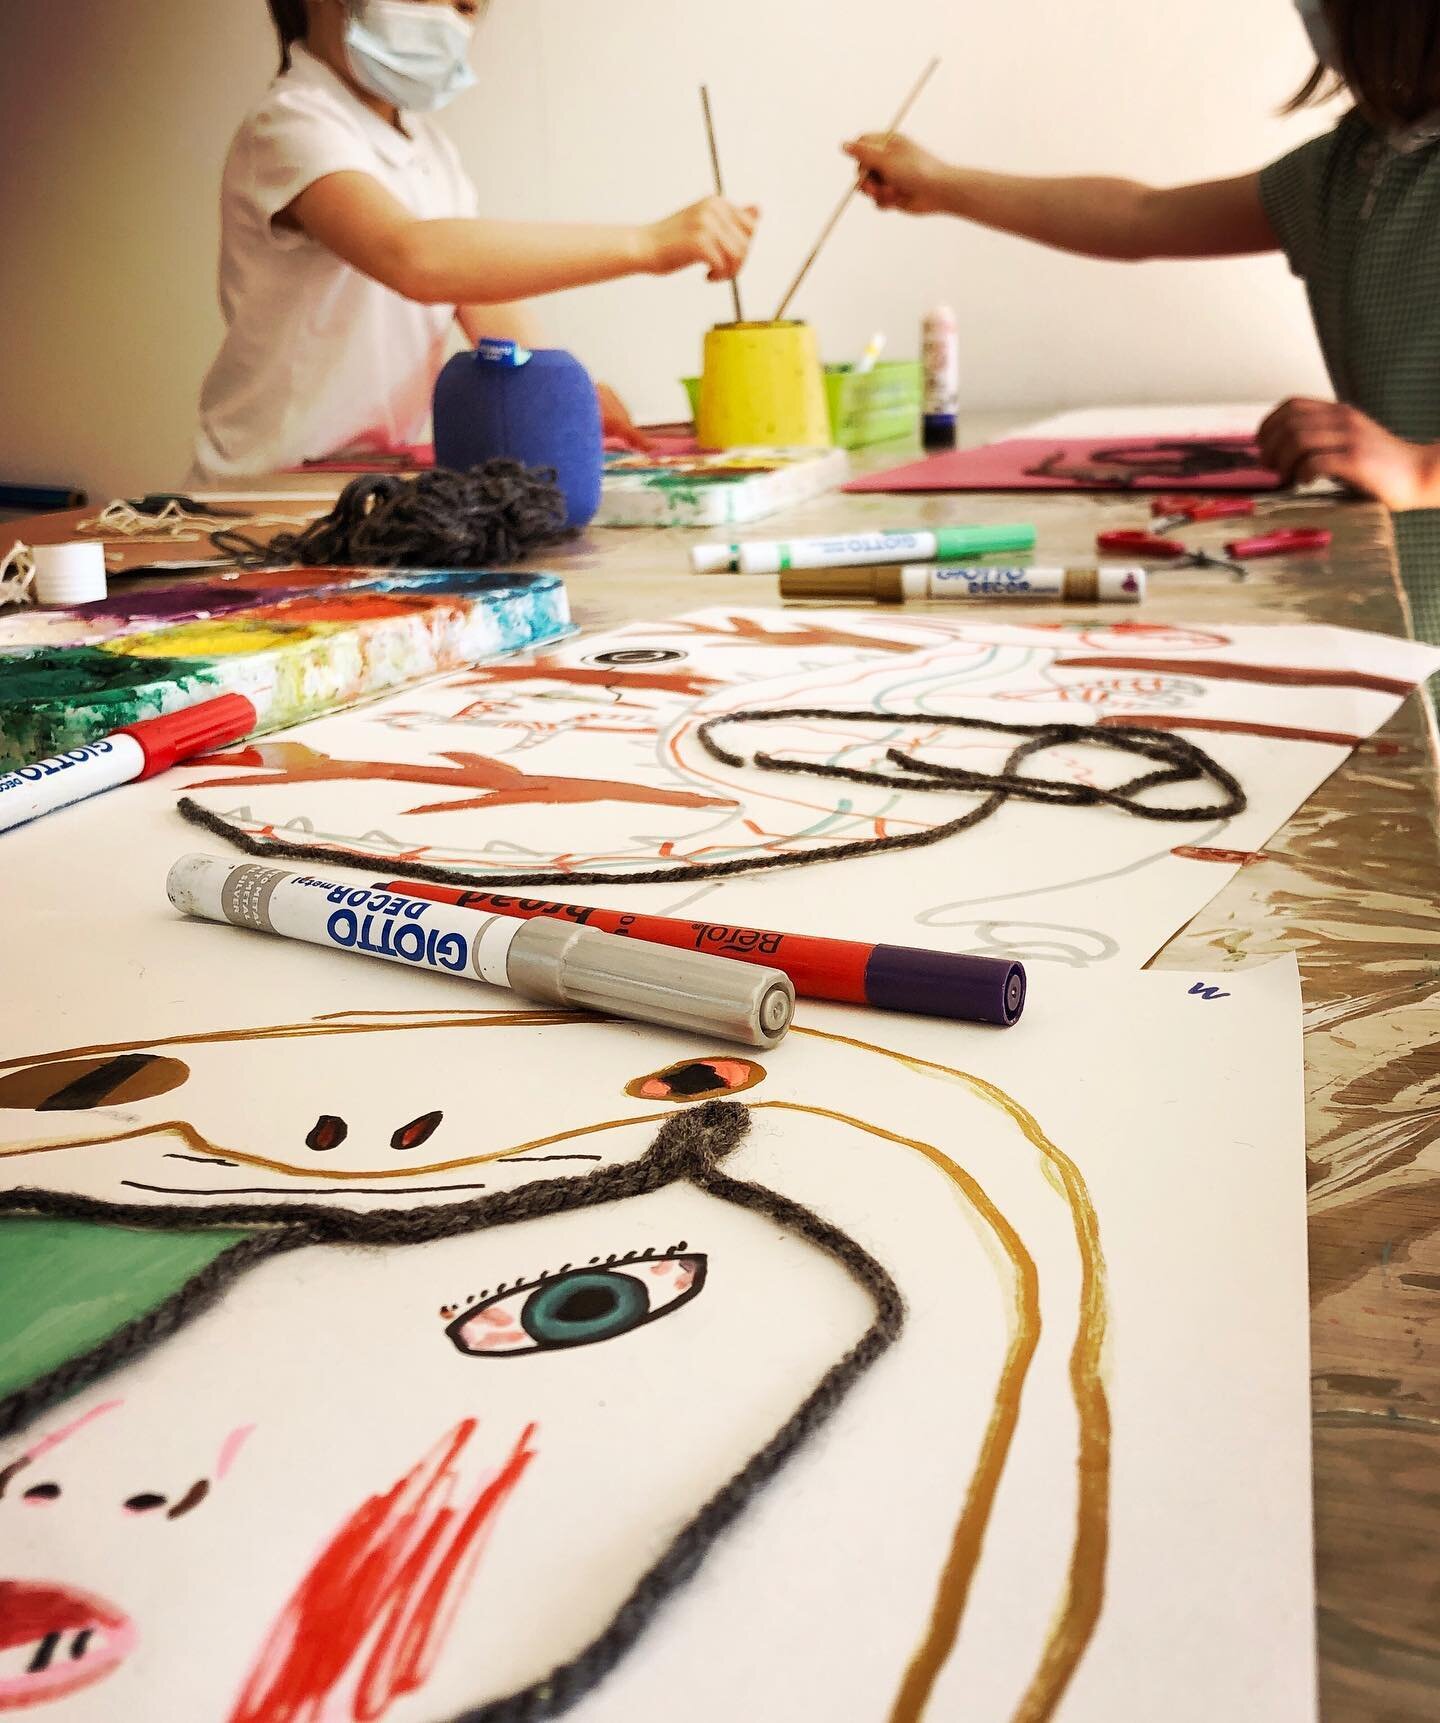 It feels good to be back ! ❤️❤️❤️💓 #art classes #Tonbridge #art #artstudio #childrenworkshops #childrencreativity #artclub #arteducation